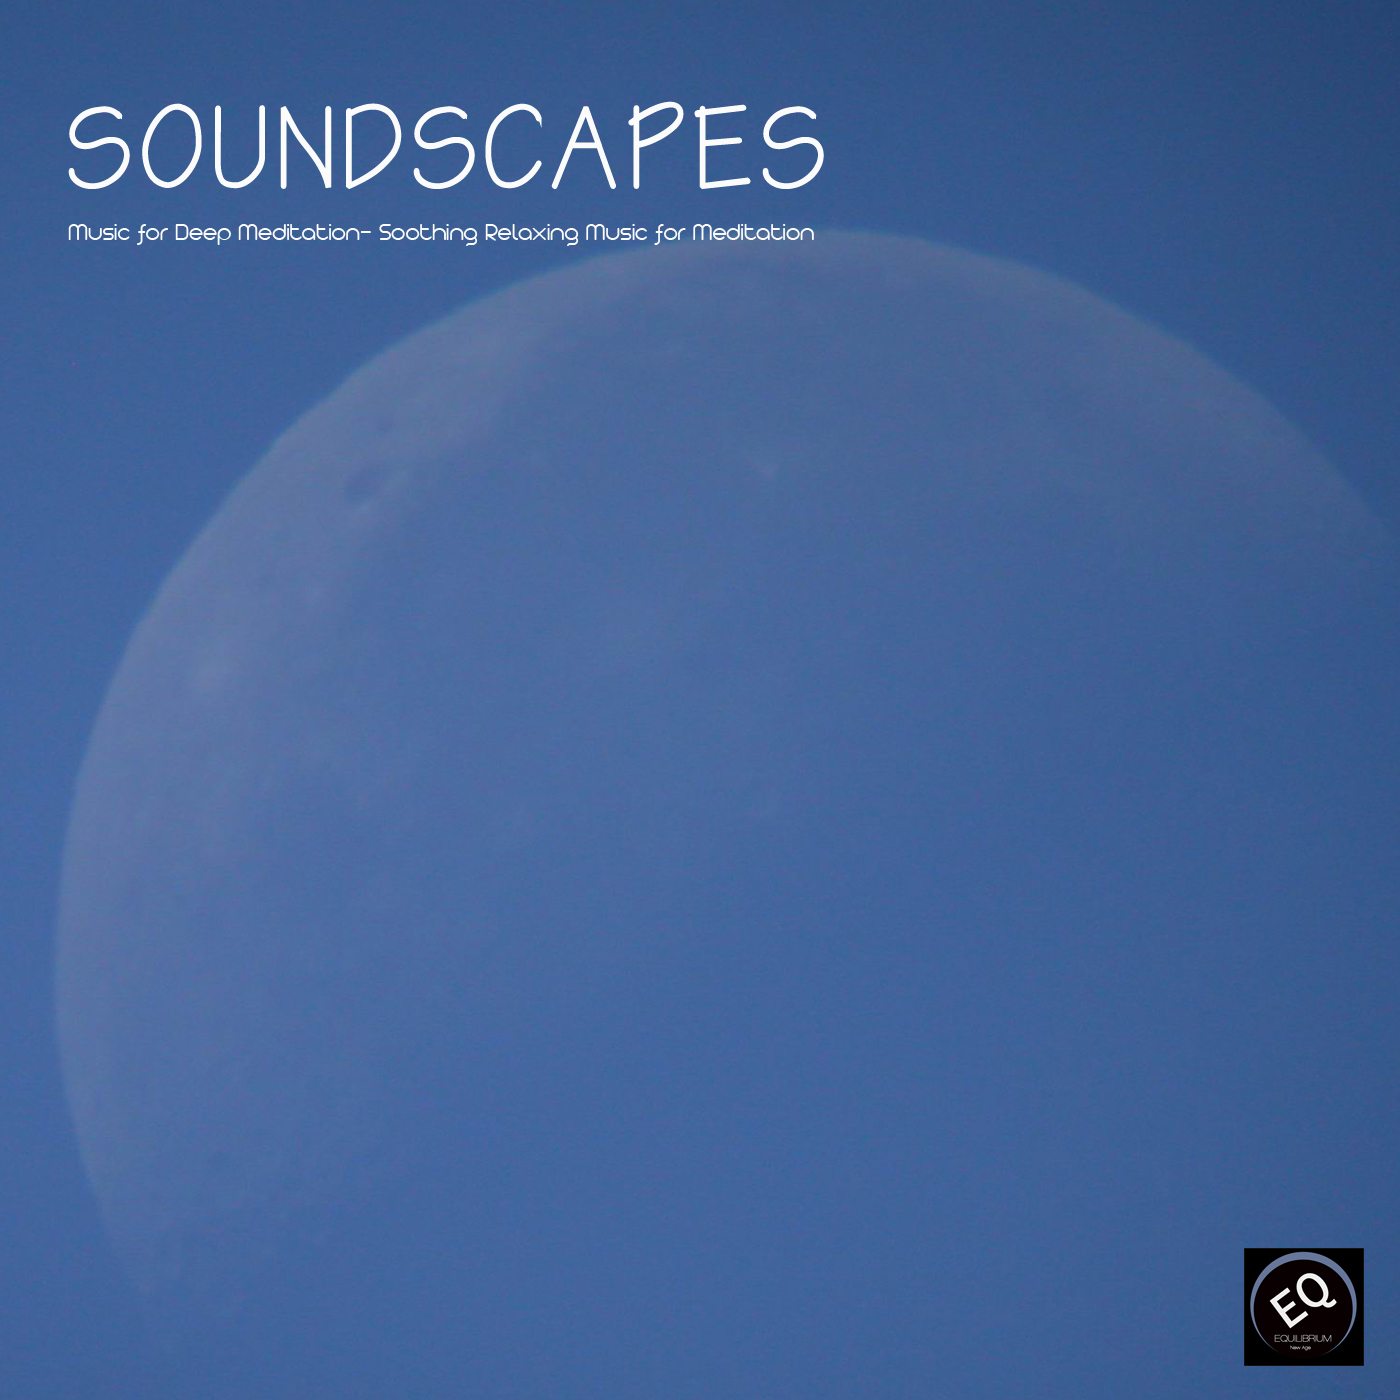 Soundscape and Nature Sound